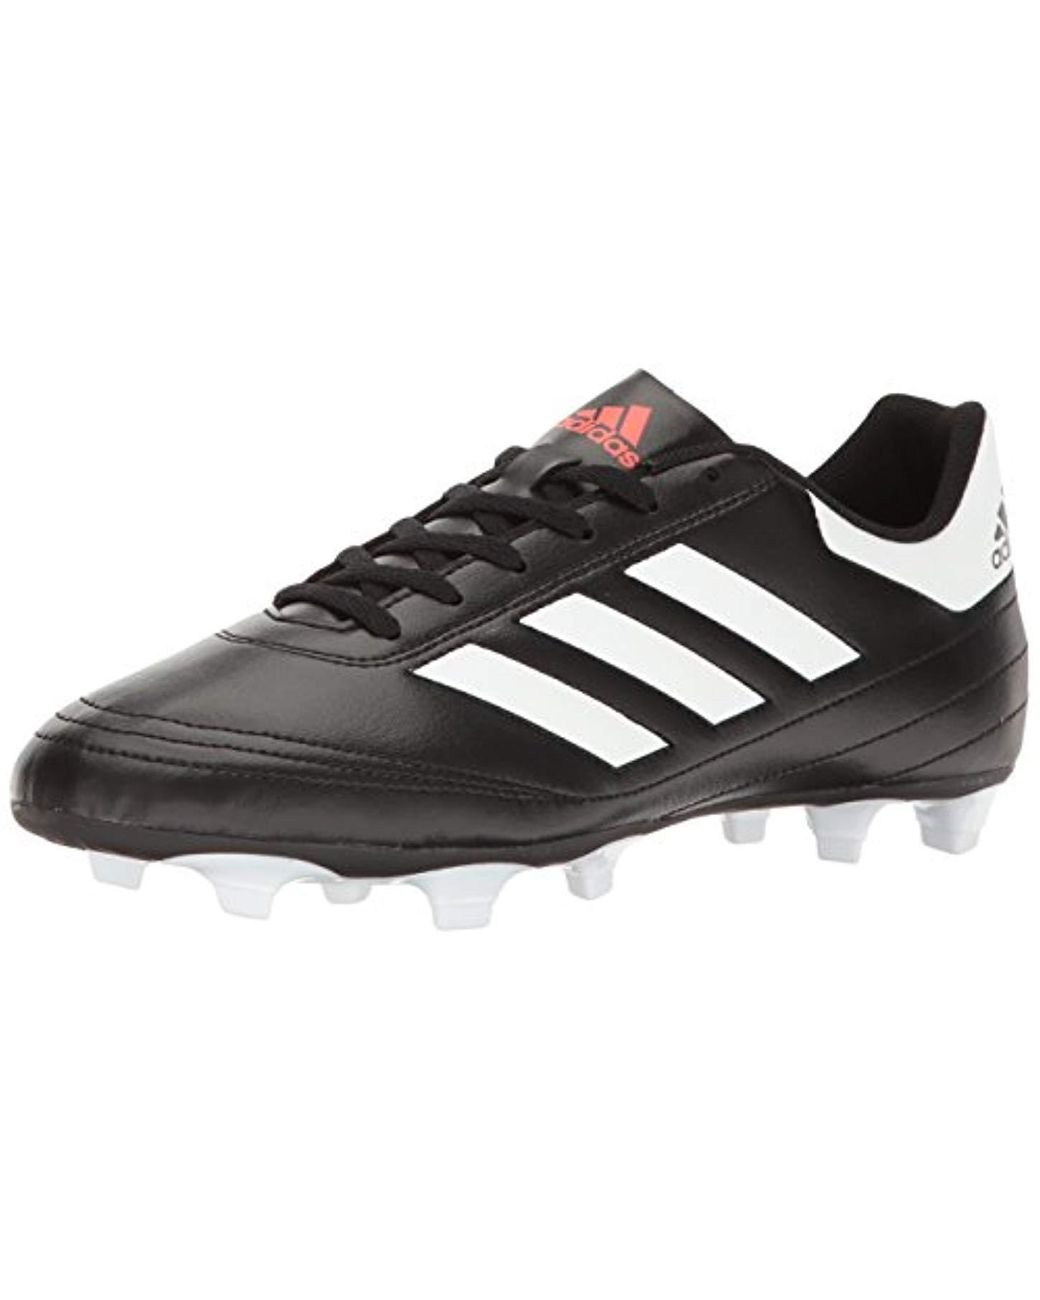 Adidas Performance Goletto Vi Fg Soccer Shoe In Black For Men Lyst